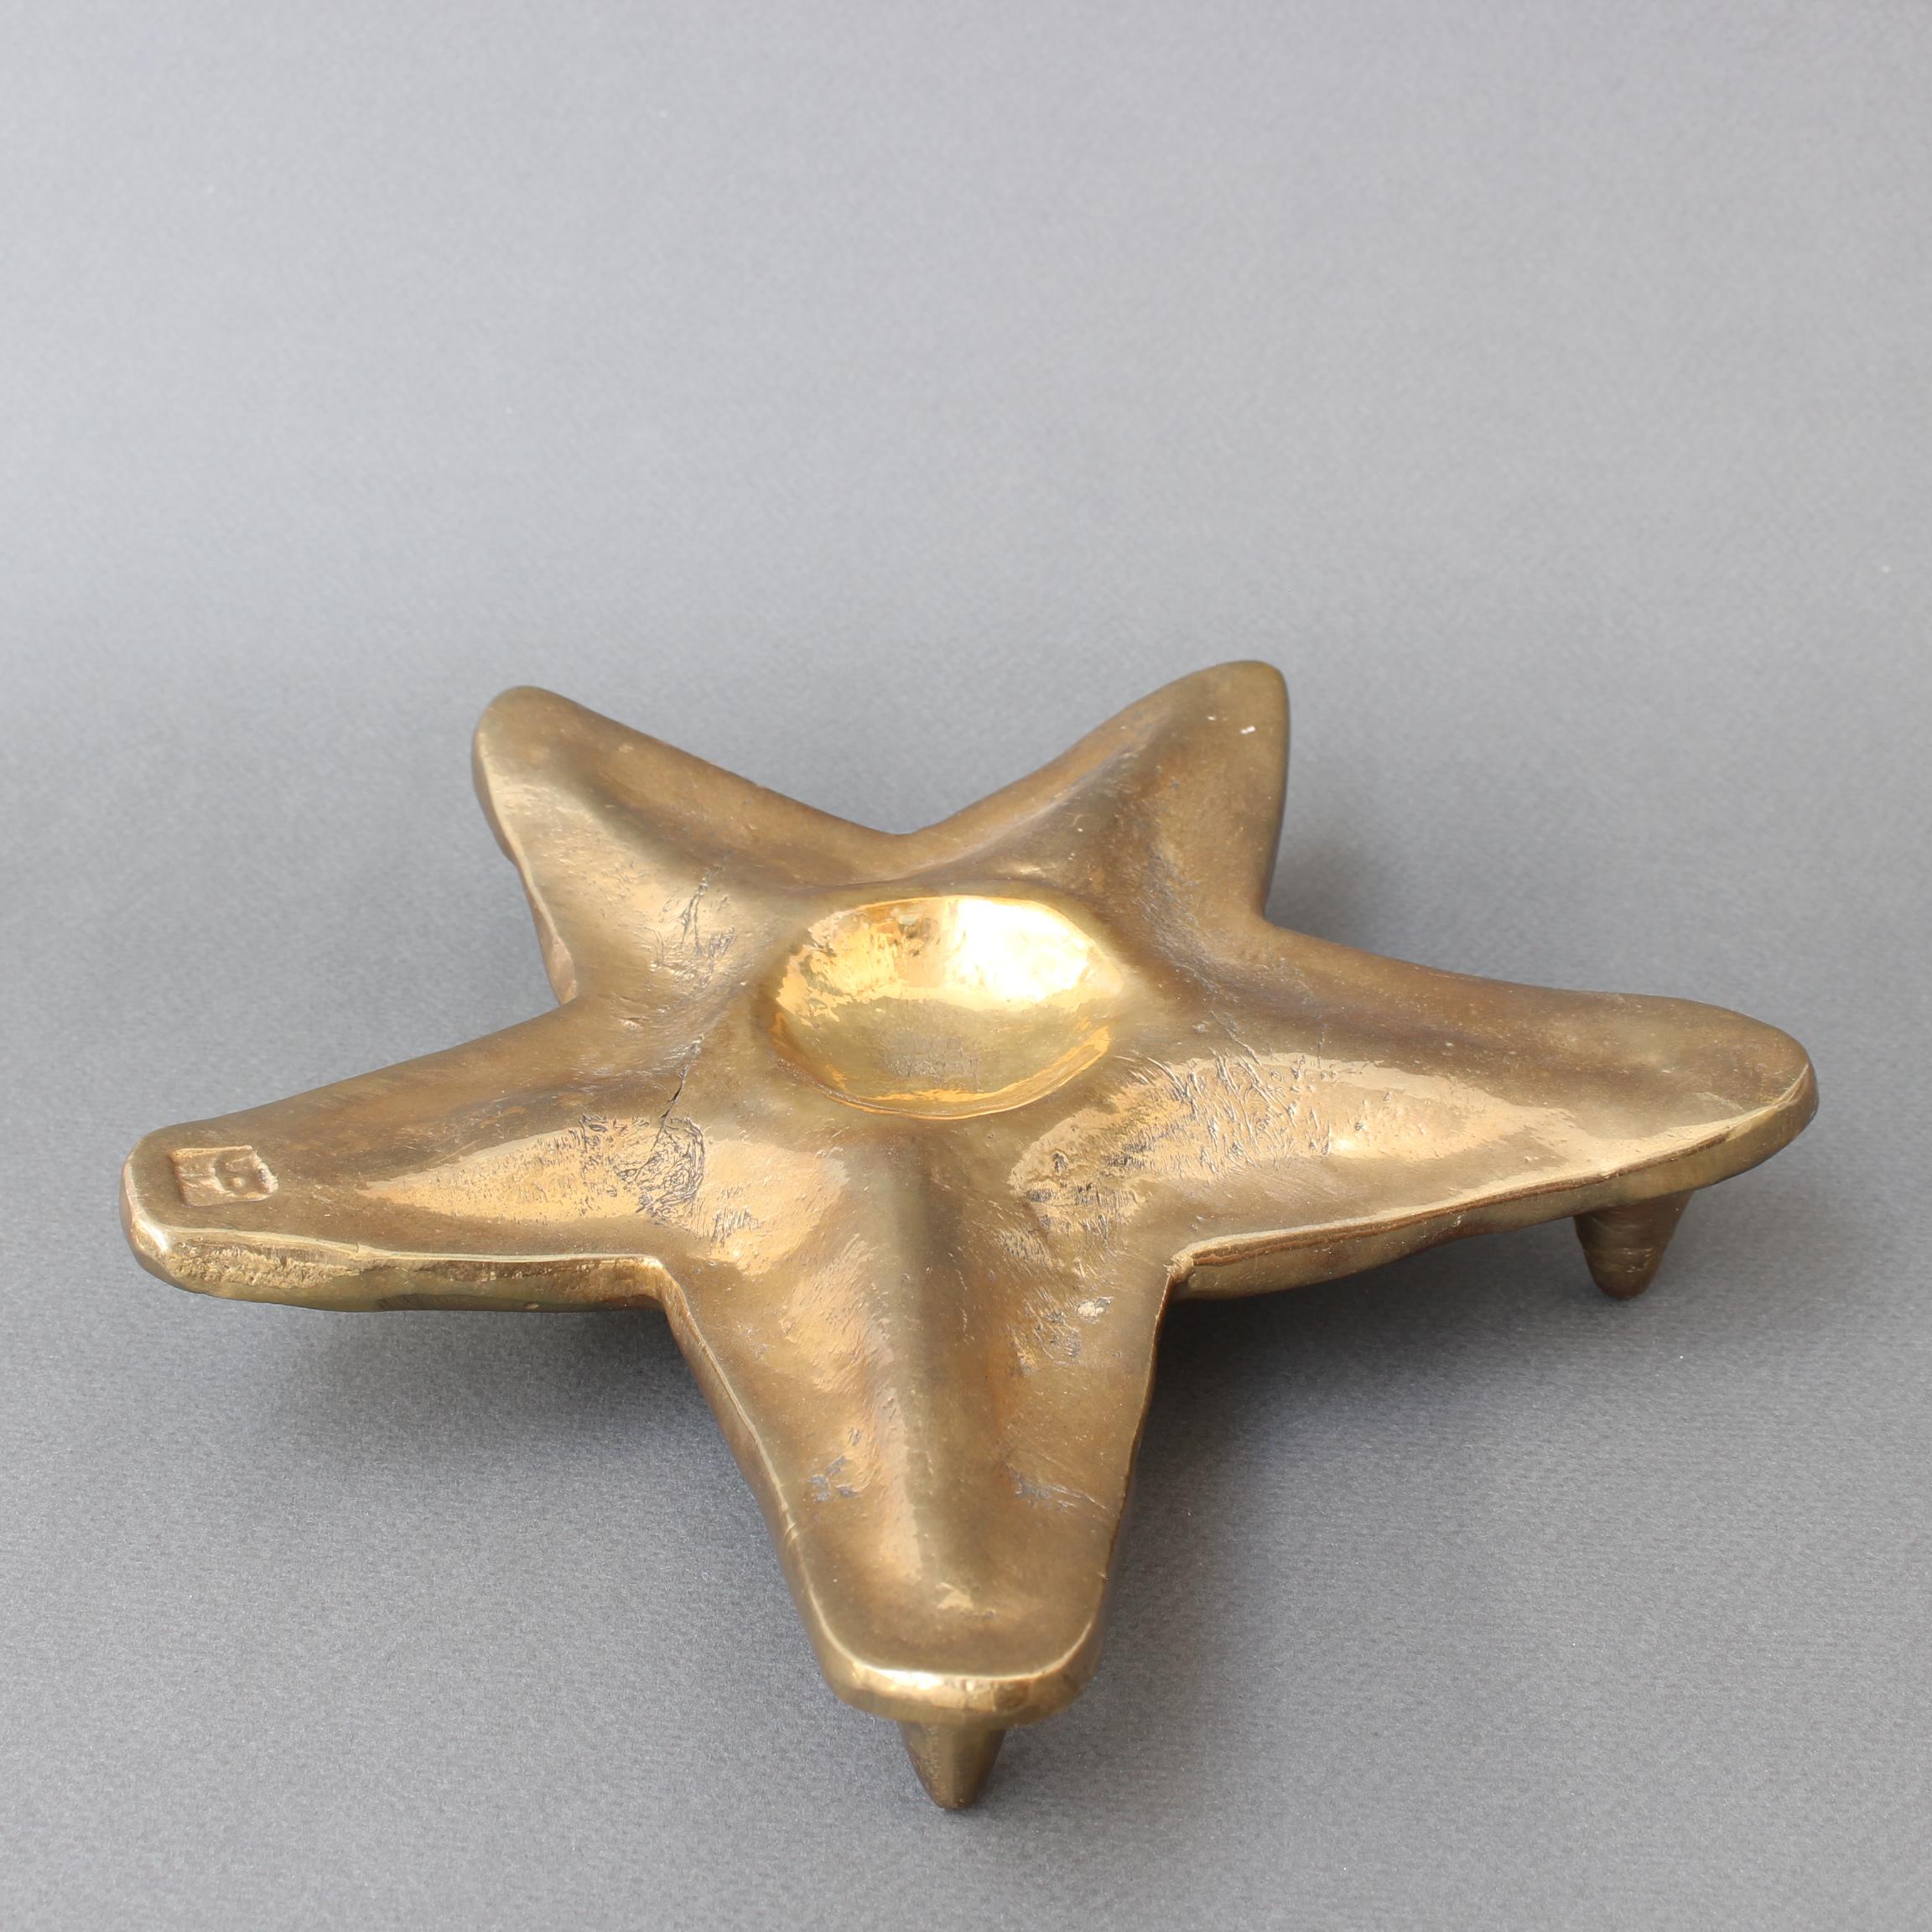 Spanish Decorative Brass Trivet in Starfish Motif by David Marshall 'circa 1990s' For Sale